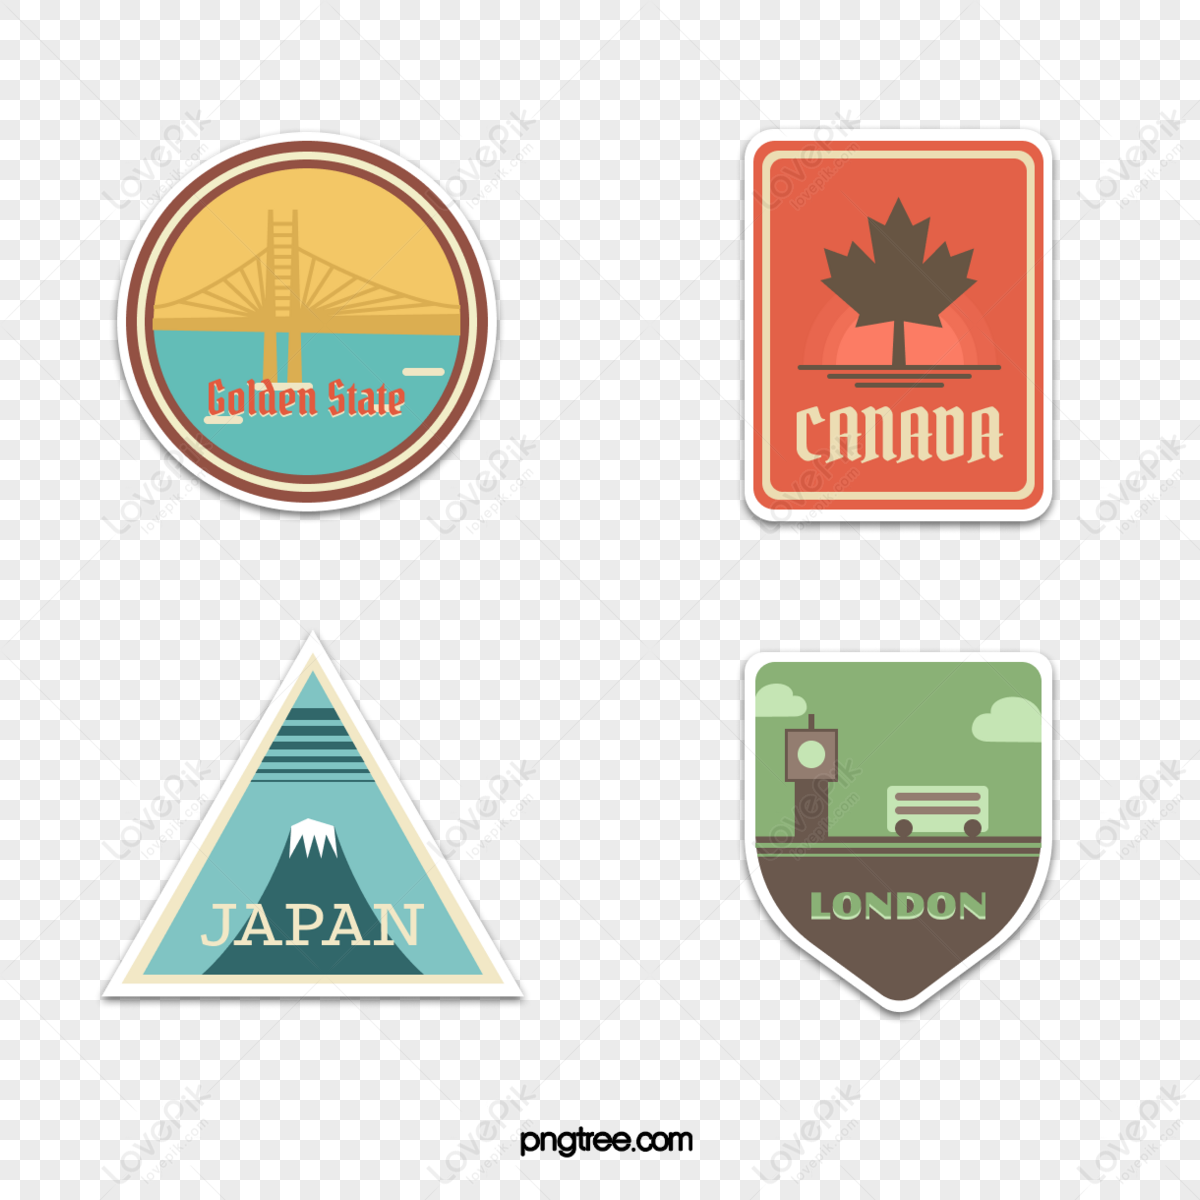 Retro Travel Illustration Sticker,london,stamp stickers,canada png hd transparent image